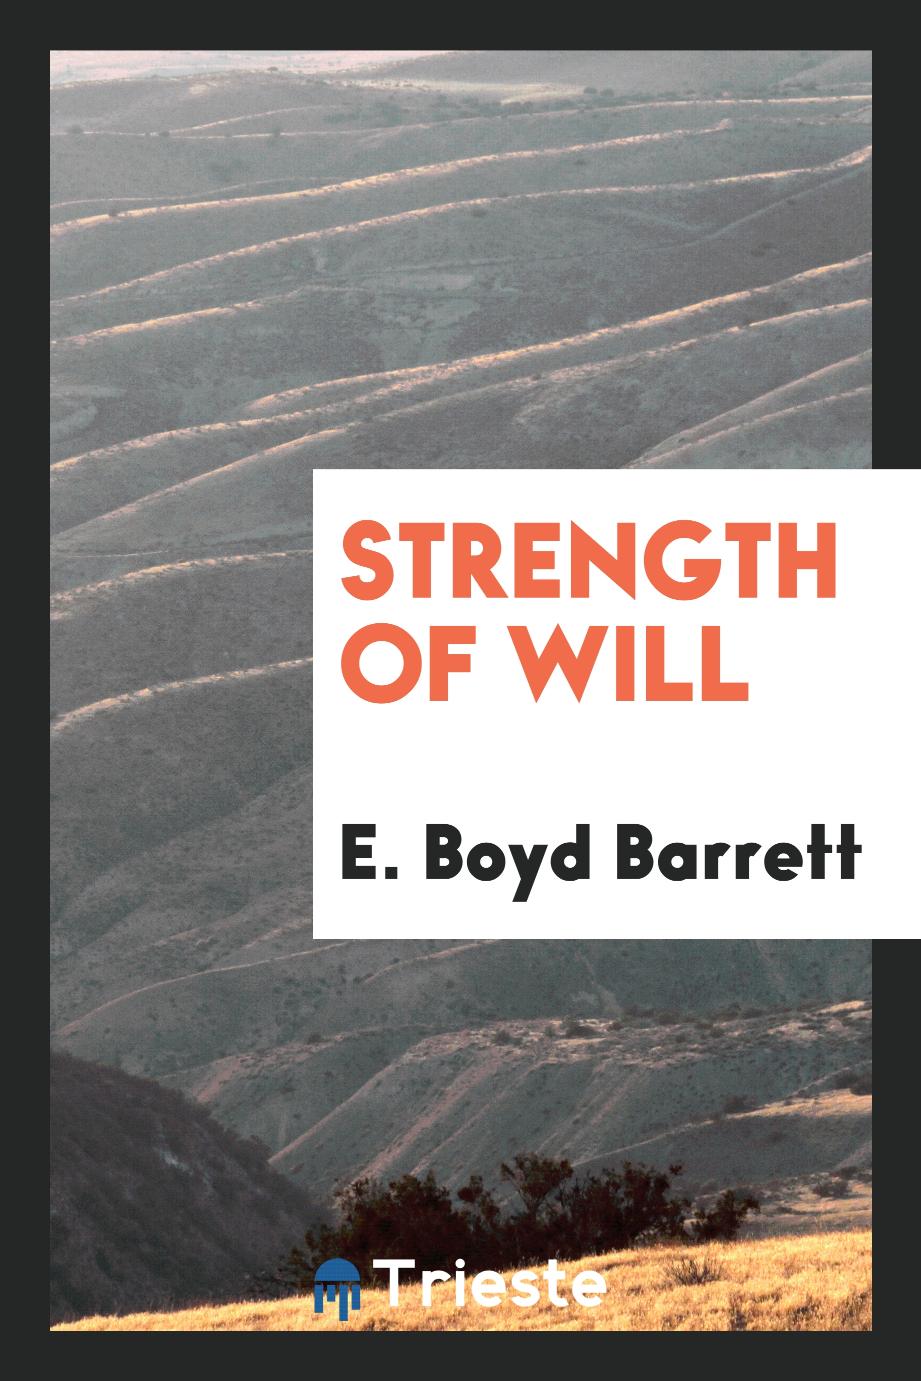 Strength of will